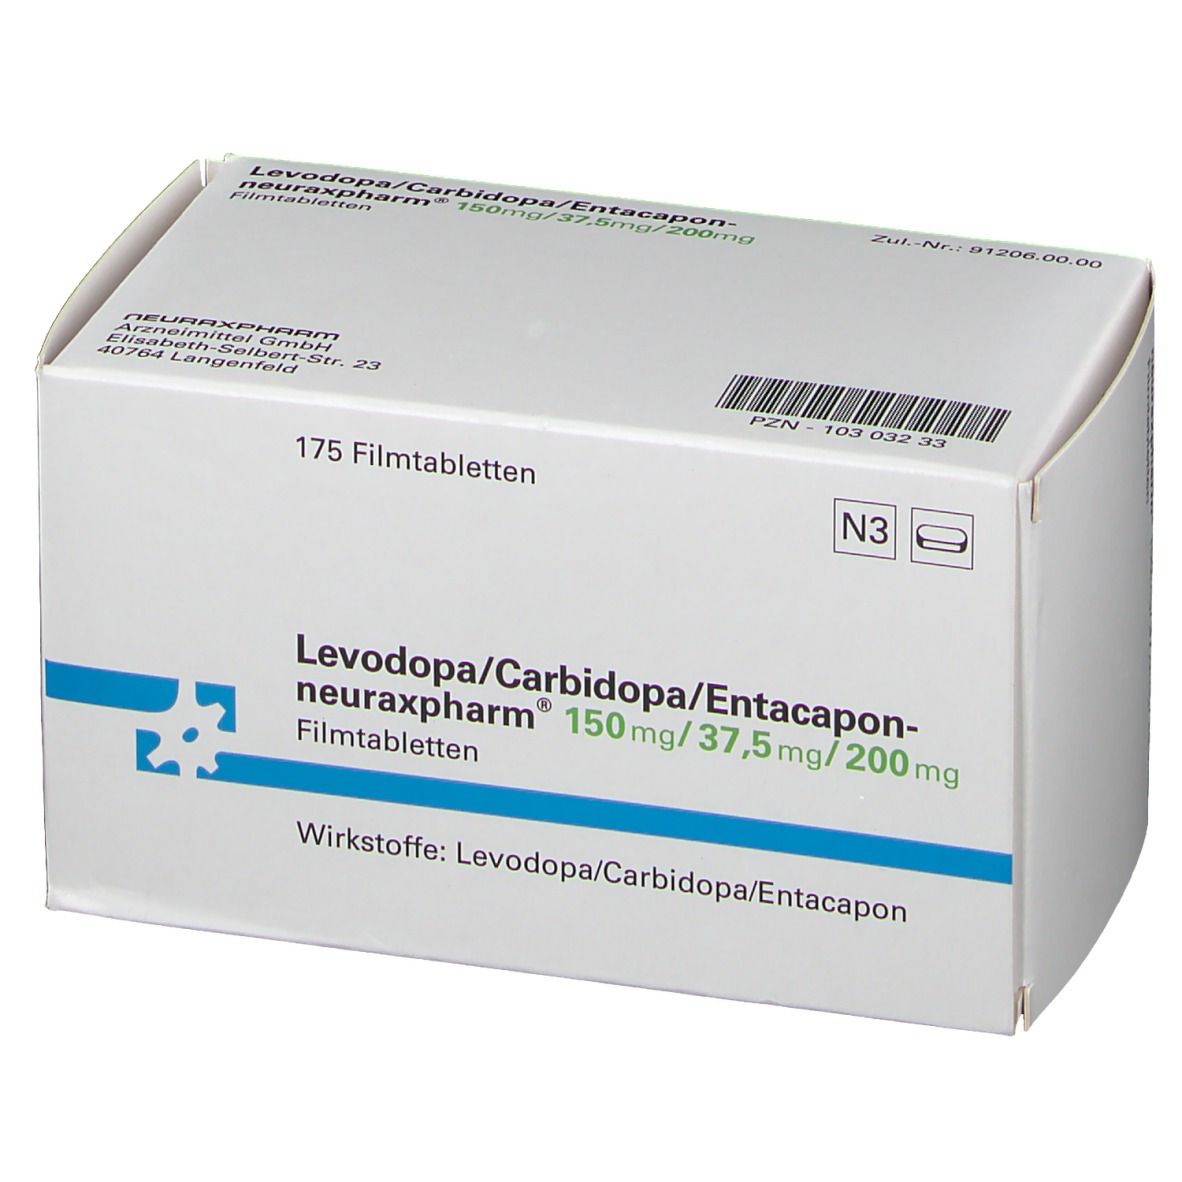 Levodopa/Carbidopa/Entacapon-neuraxpharm® 150 mg/37,5 mg/200 mg